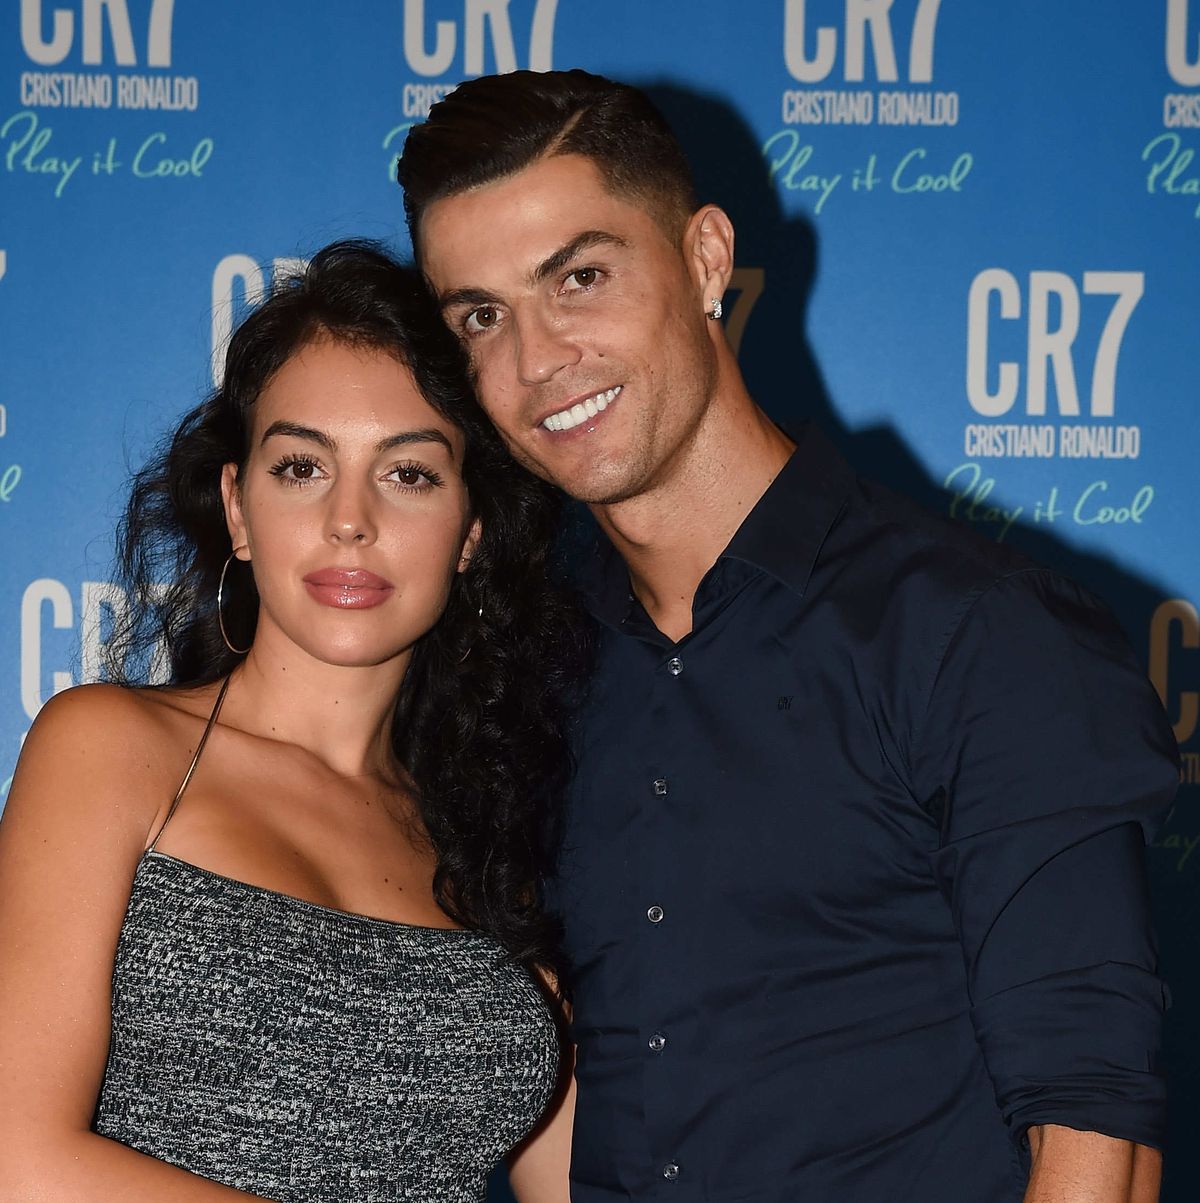 Ronaldo Fuck Her Wife - Cristiano Ronaldo and Georgina Rodriguez share sad death of son